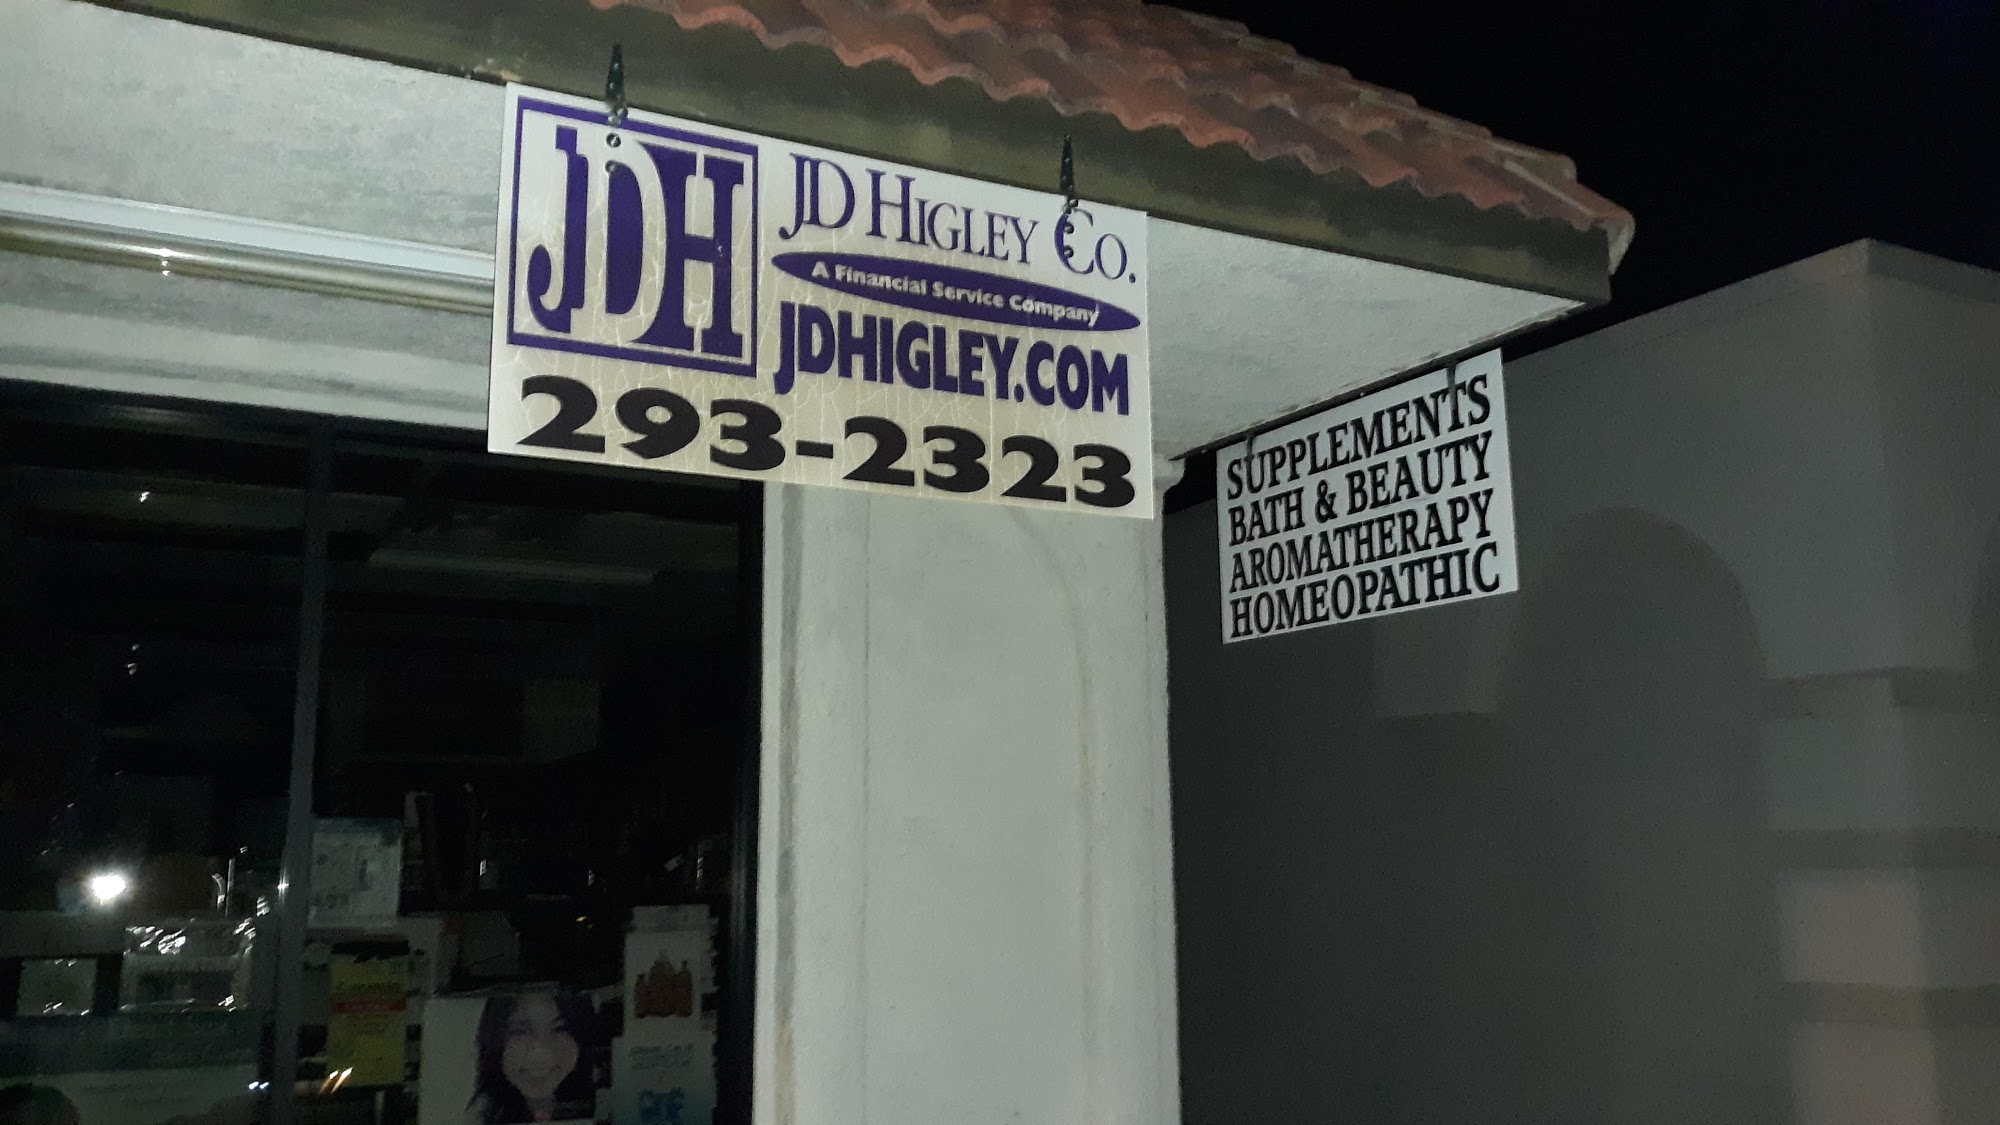 JD Higley Company